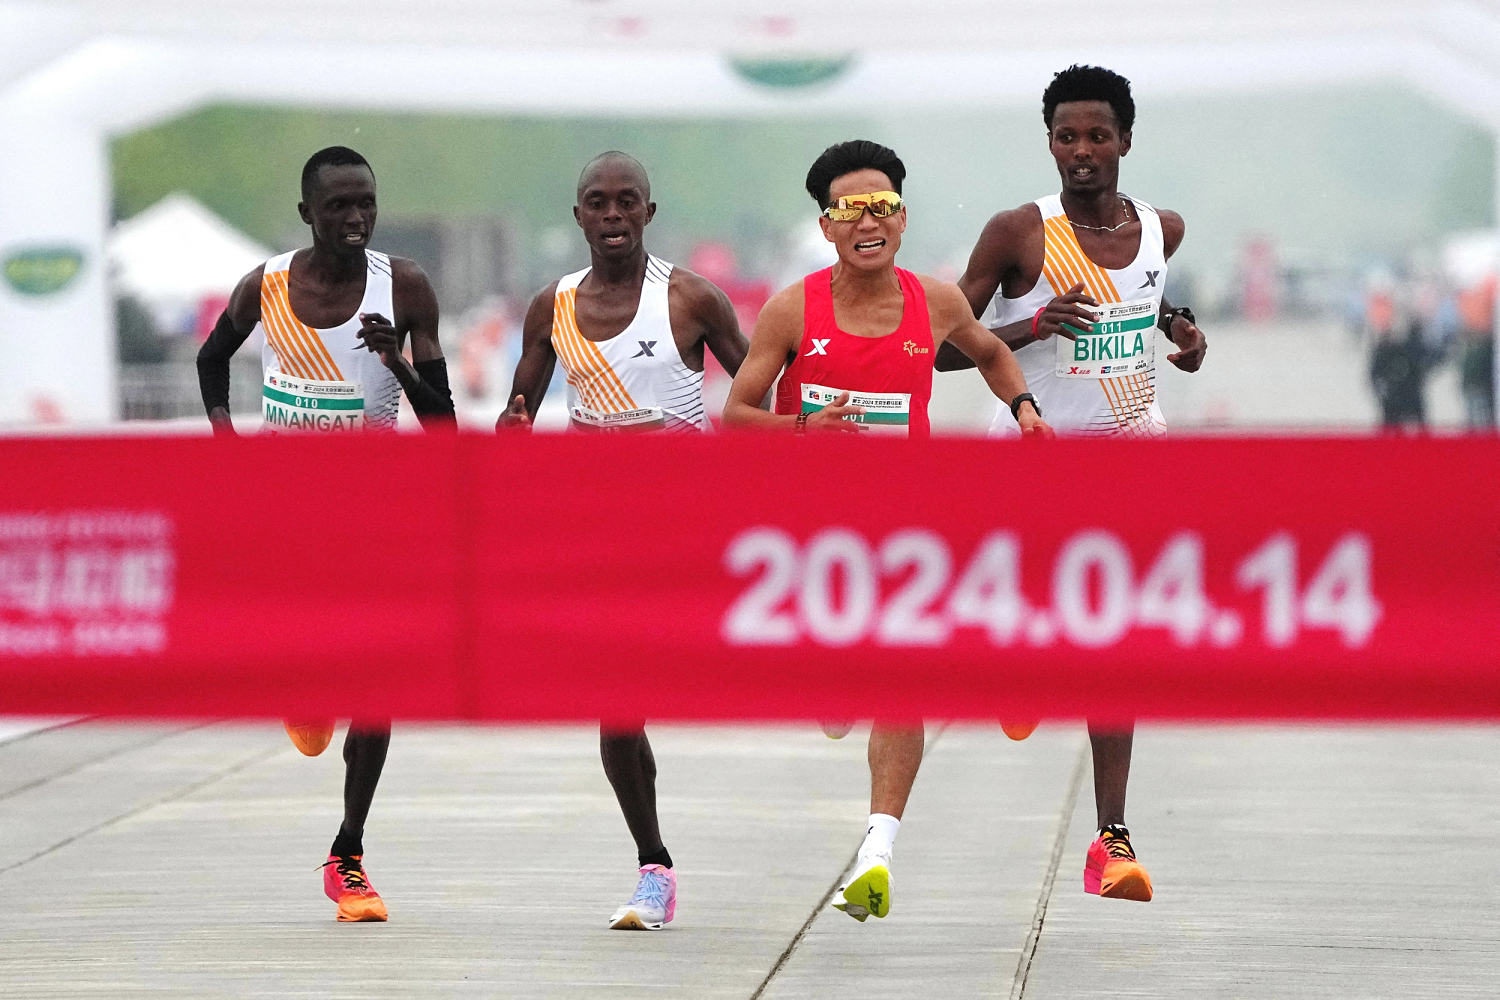 Chinese runner's win is revoked after investigation into Beijing Half Marathon